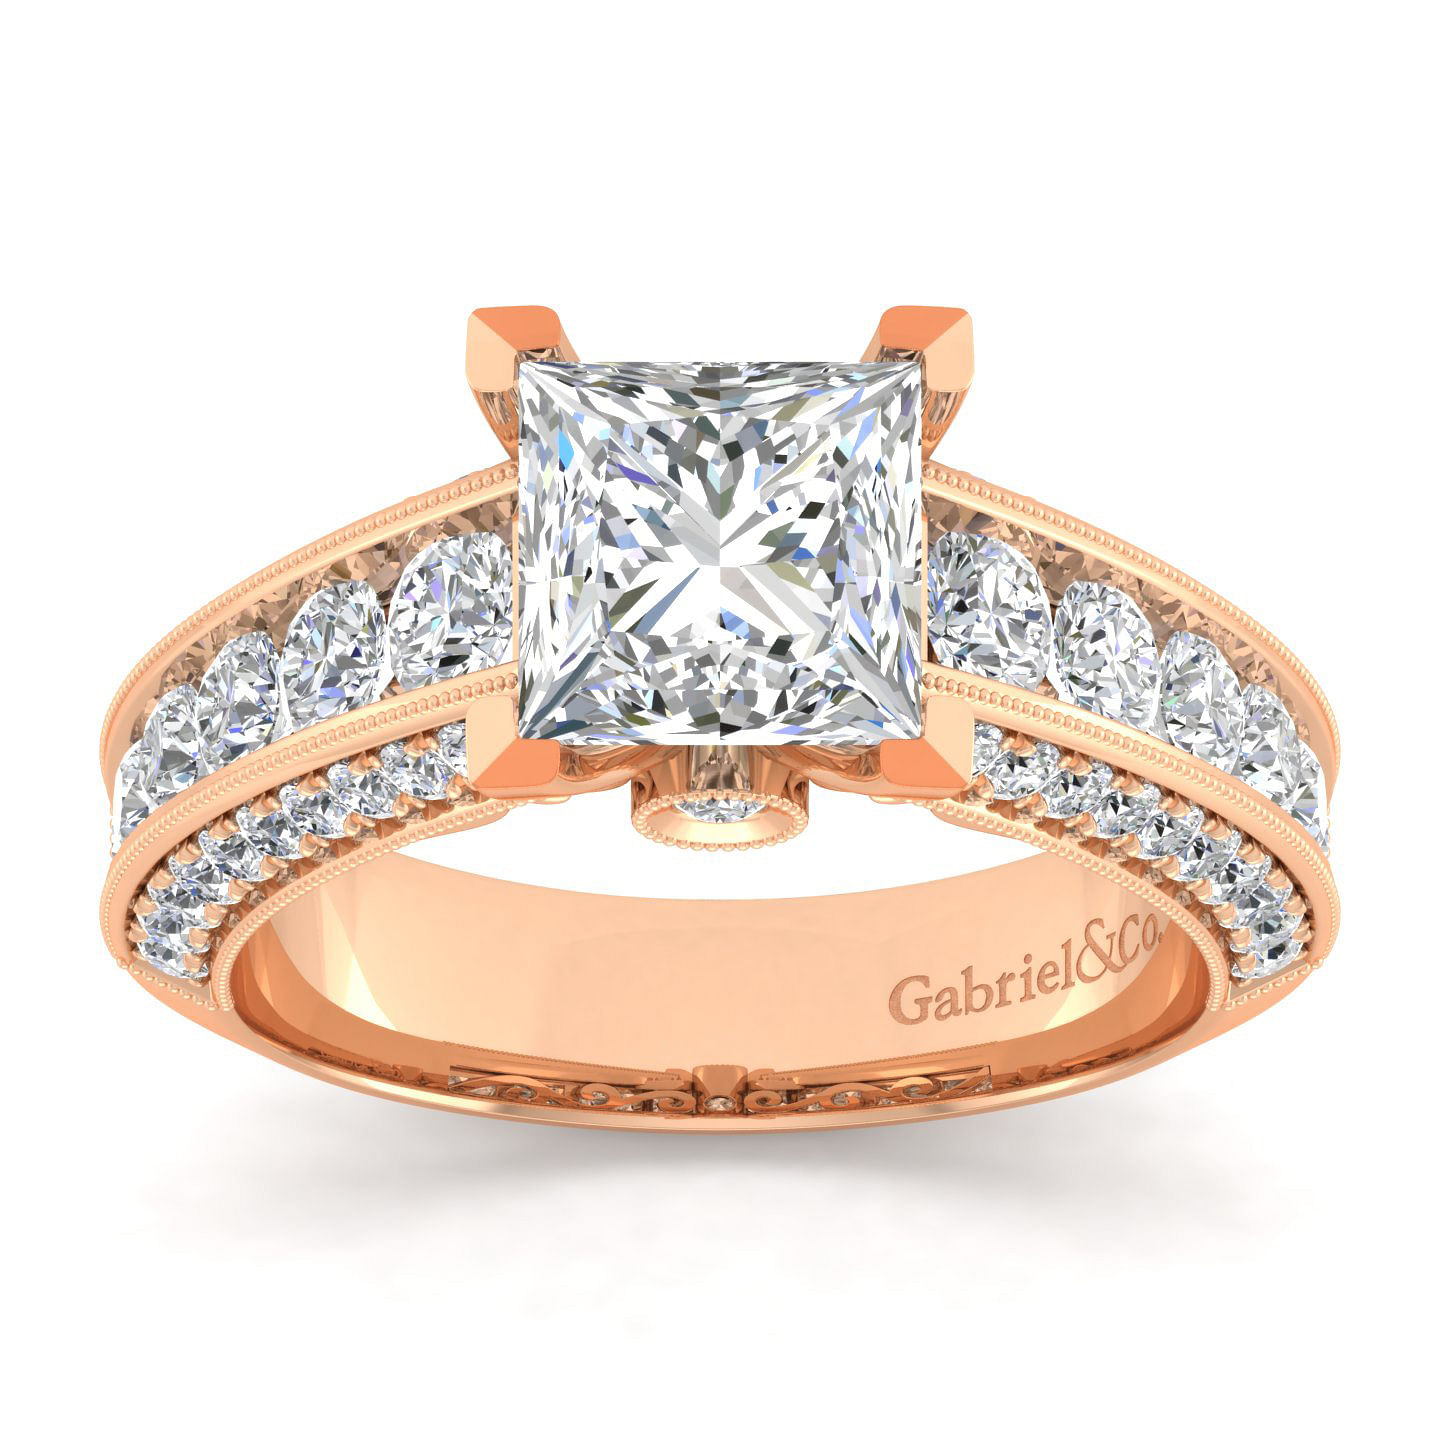 Vintage Inspired 14K Rose Gold Wide Band Princess Cut Diamond Engagement Ring